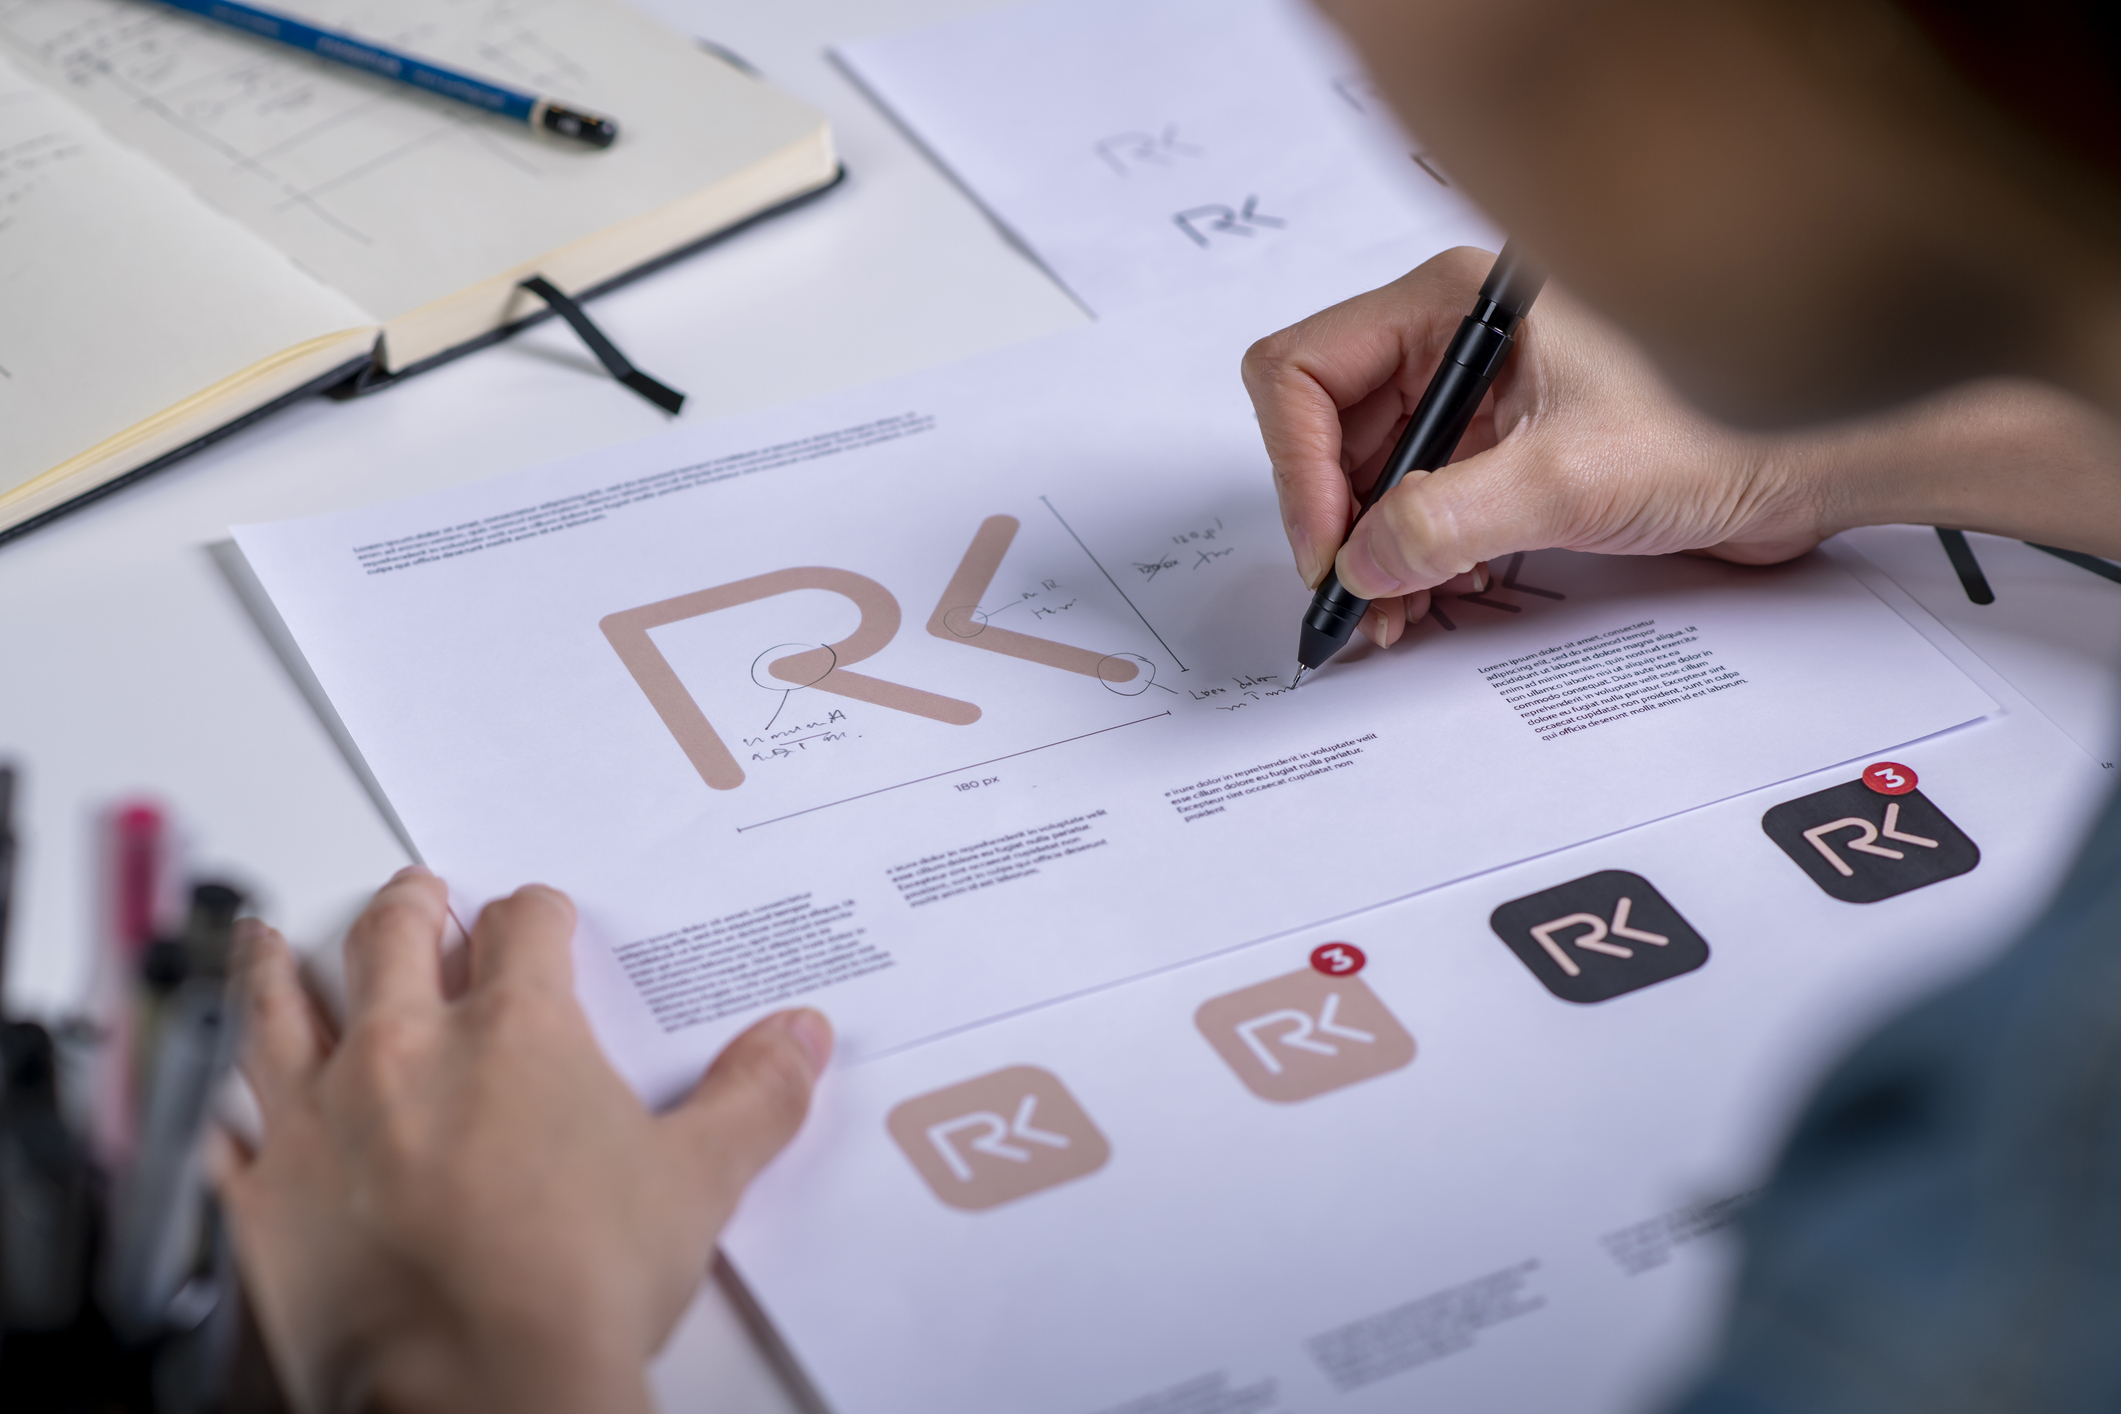 Using a professional design service for logo development